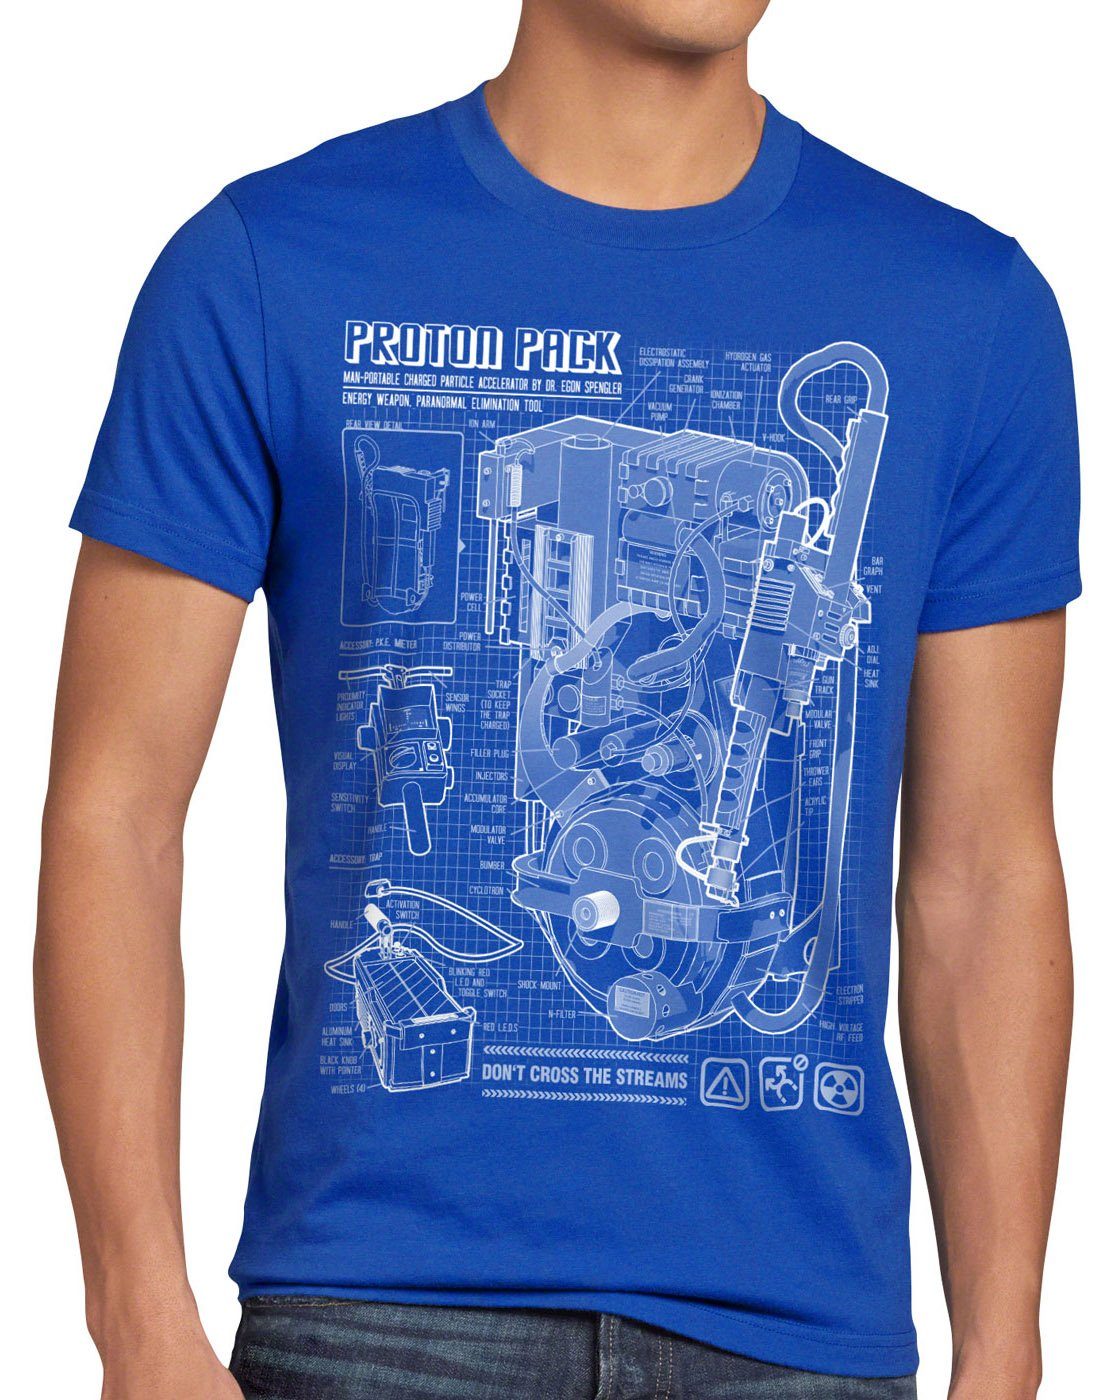 blau style3 ecto-1 geist Geisterjäger T-Shirt ghostbusters Herren Protonenstrahler halloween Print-Shirt